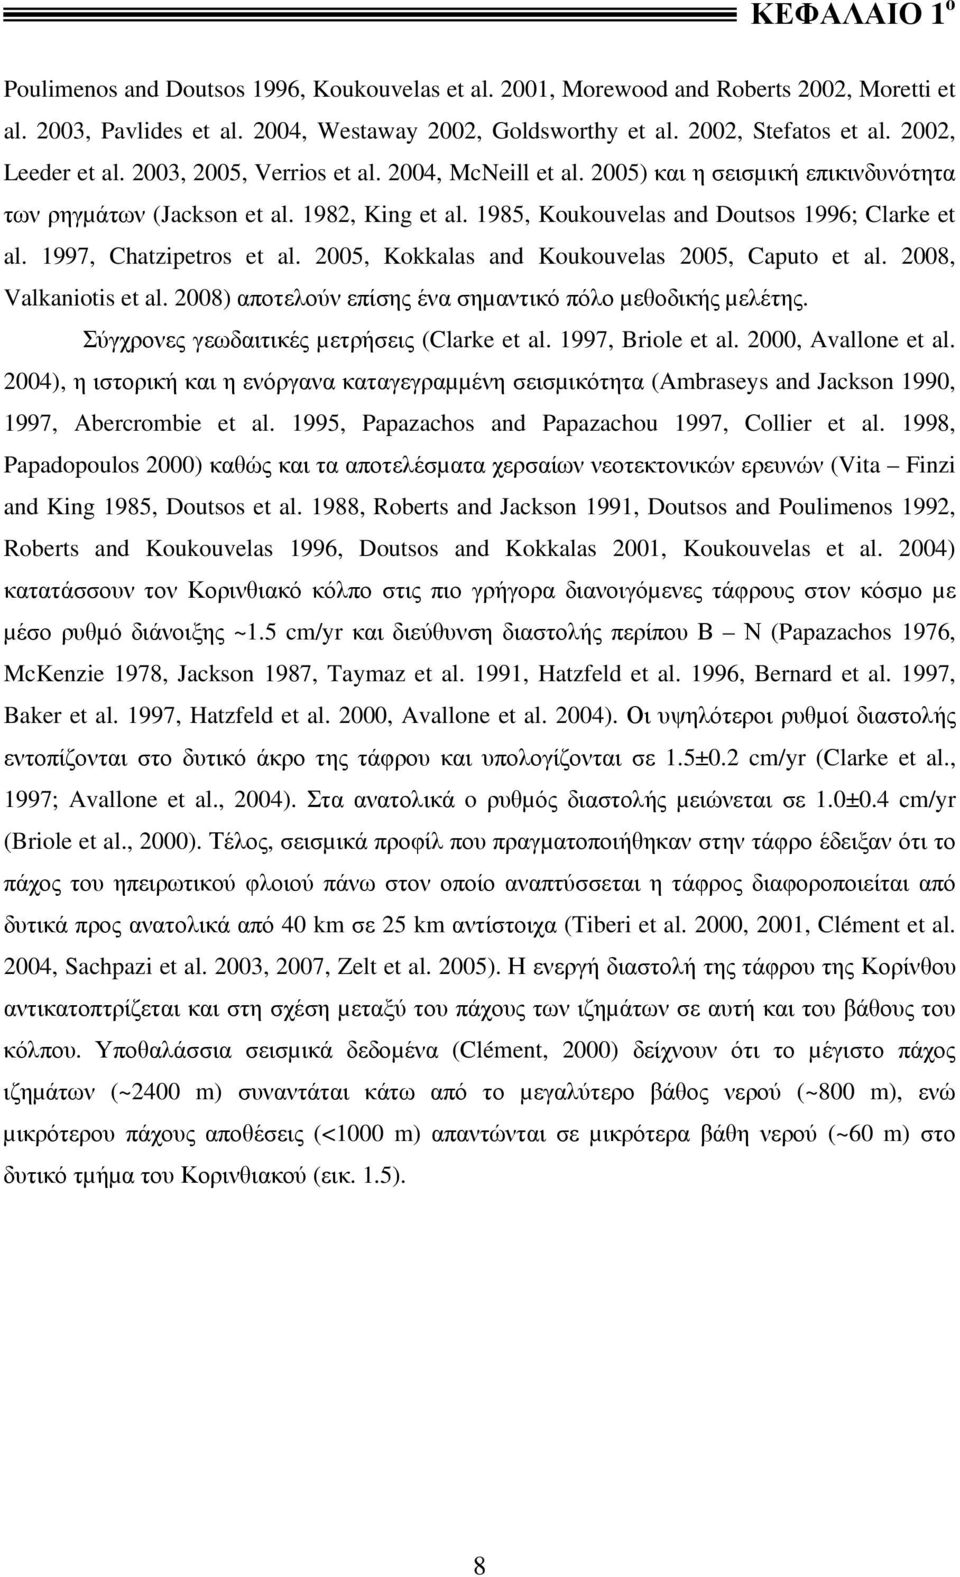 1997, Chatzipetros et al. 2005, Kokkalas and Koukouvelas 2005, Caputo et al. 2008, Valkaniotis et al. 2008) αποτελούν επίσης ένα σηµαντικό πόλο µεθοδικής µελέτης.